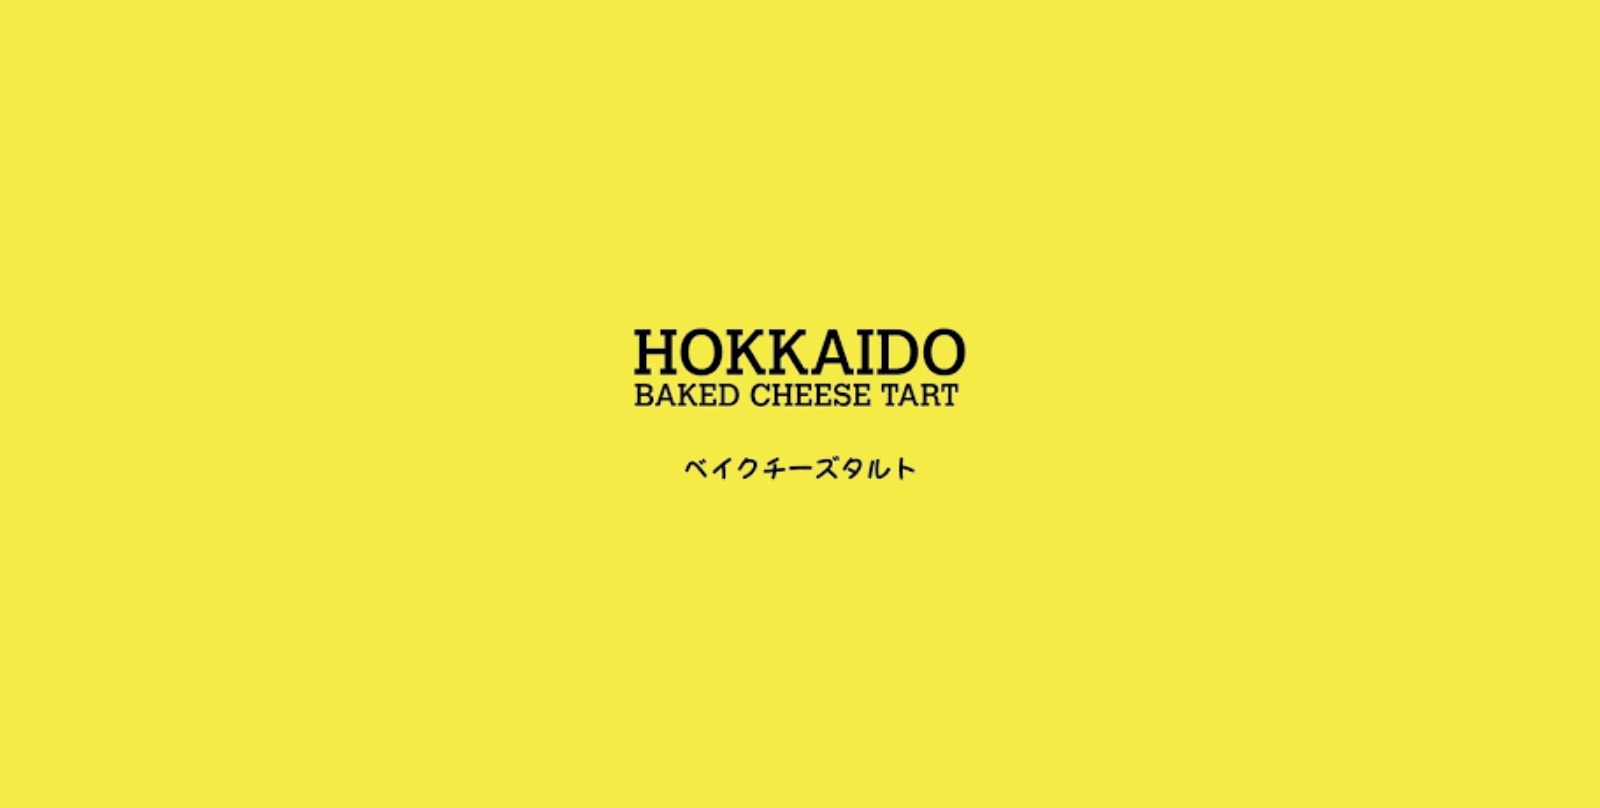 Hokkaido Baked Cheese Tart Menu Prices Australia